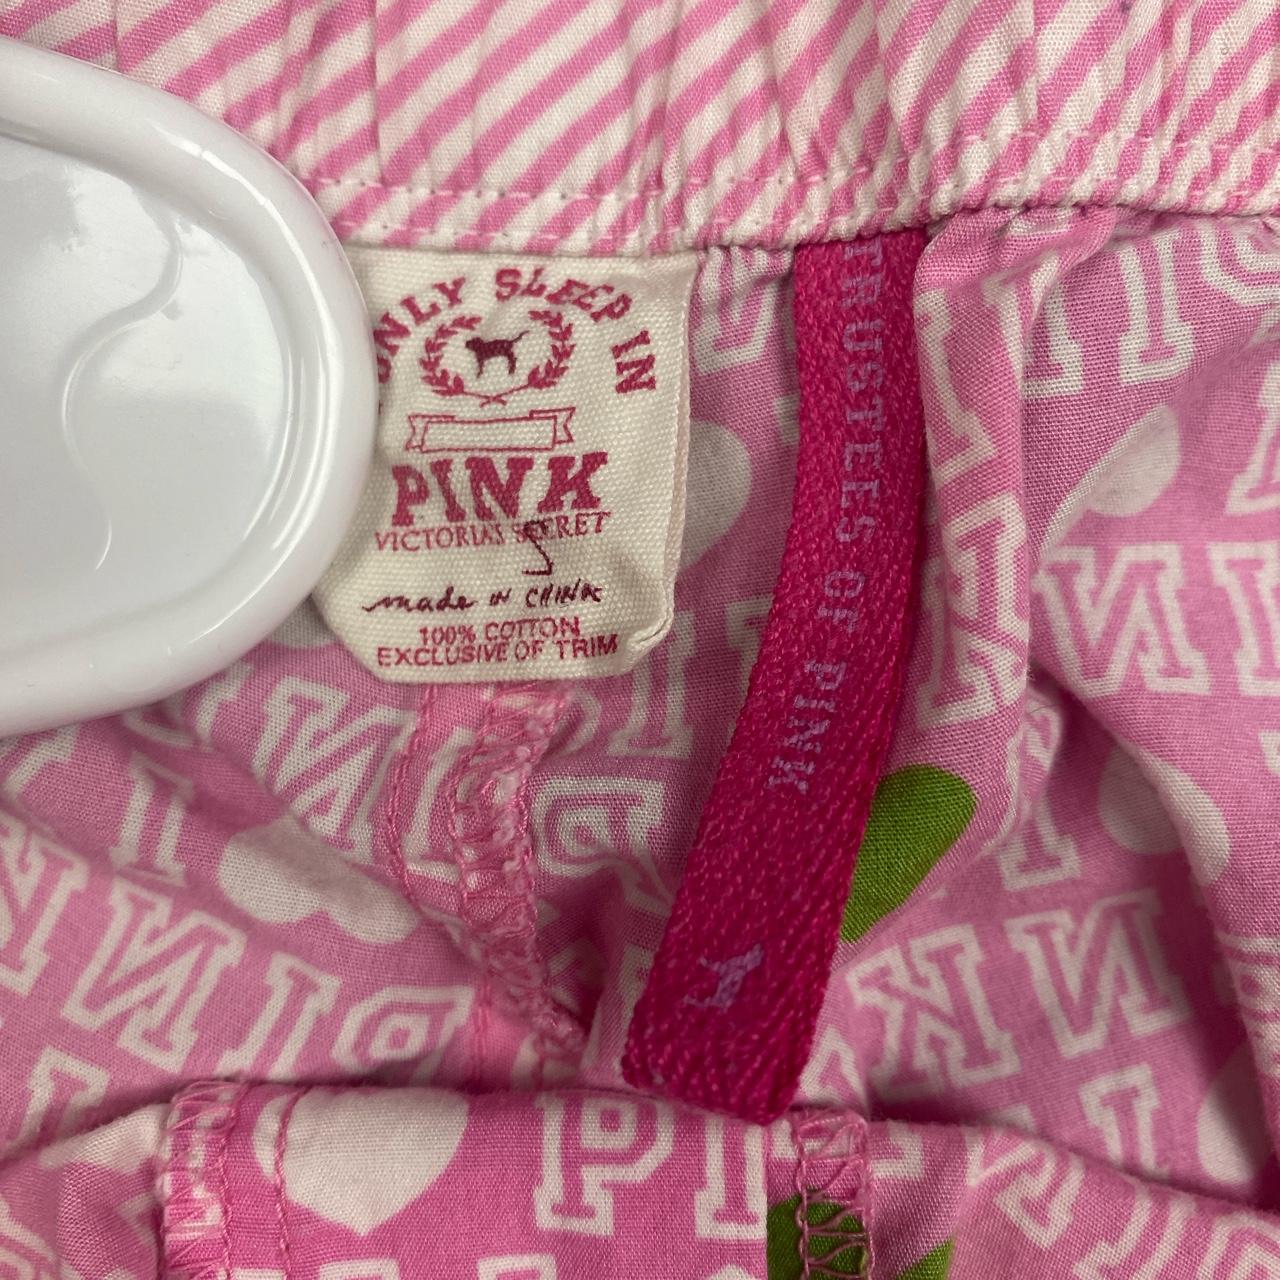 Victoria's Secret Women's Pink and Green Pajamas | Depop